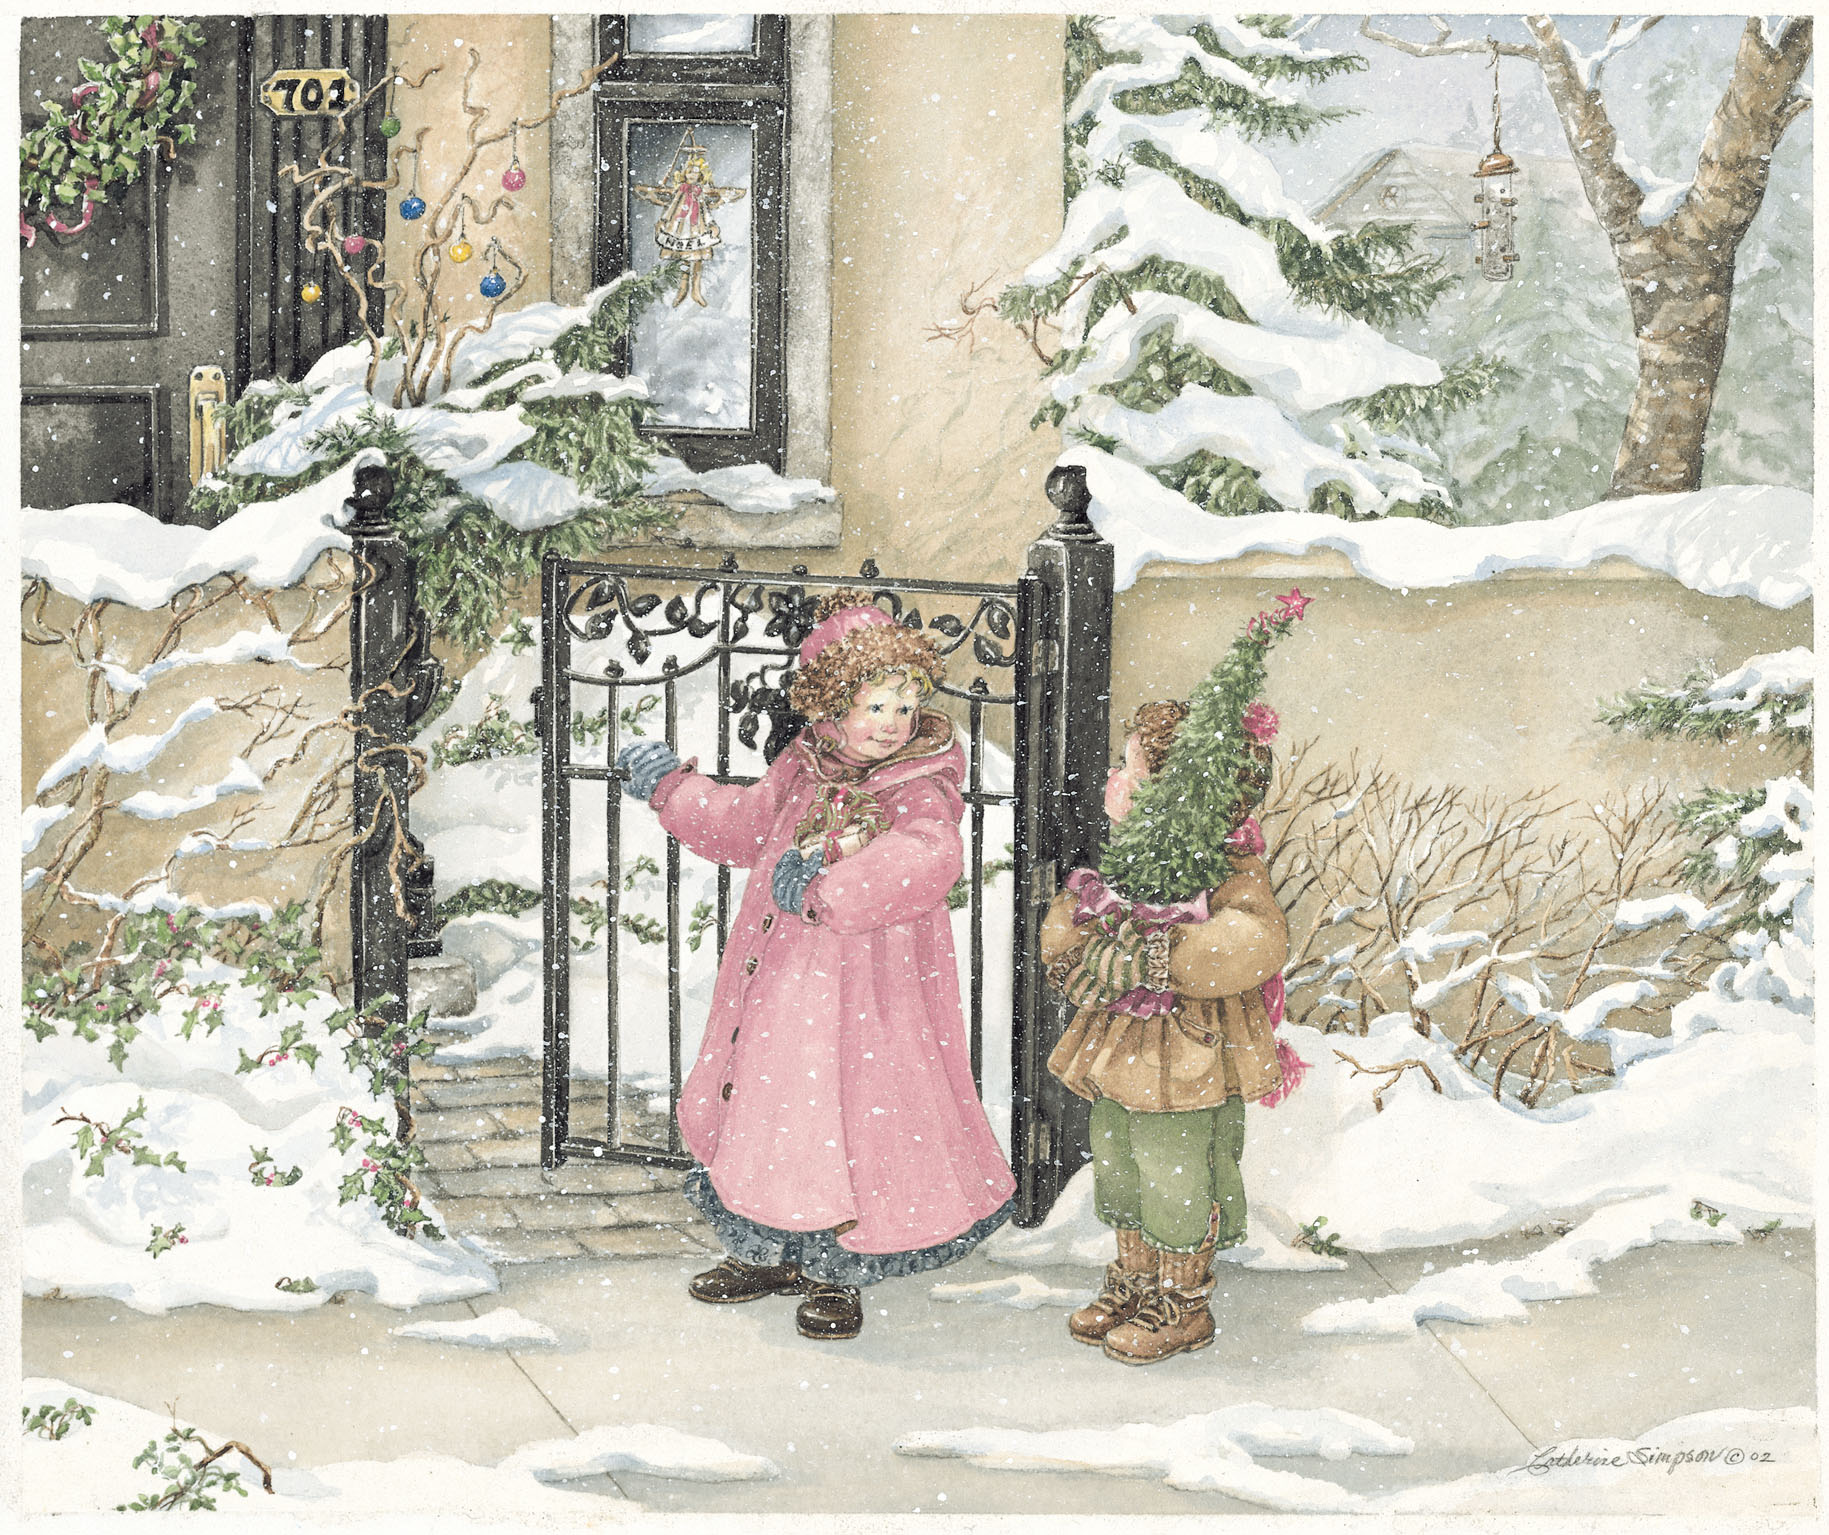 Gramma’s Christmas by Catherine Simpson